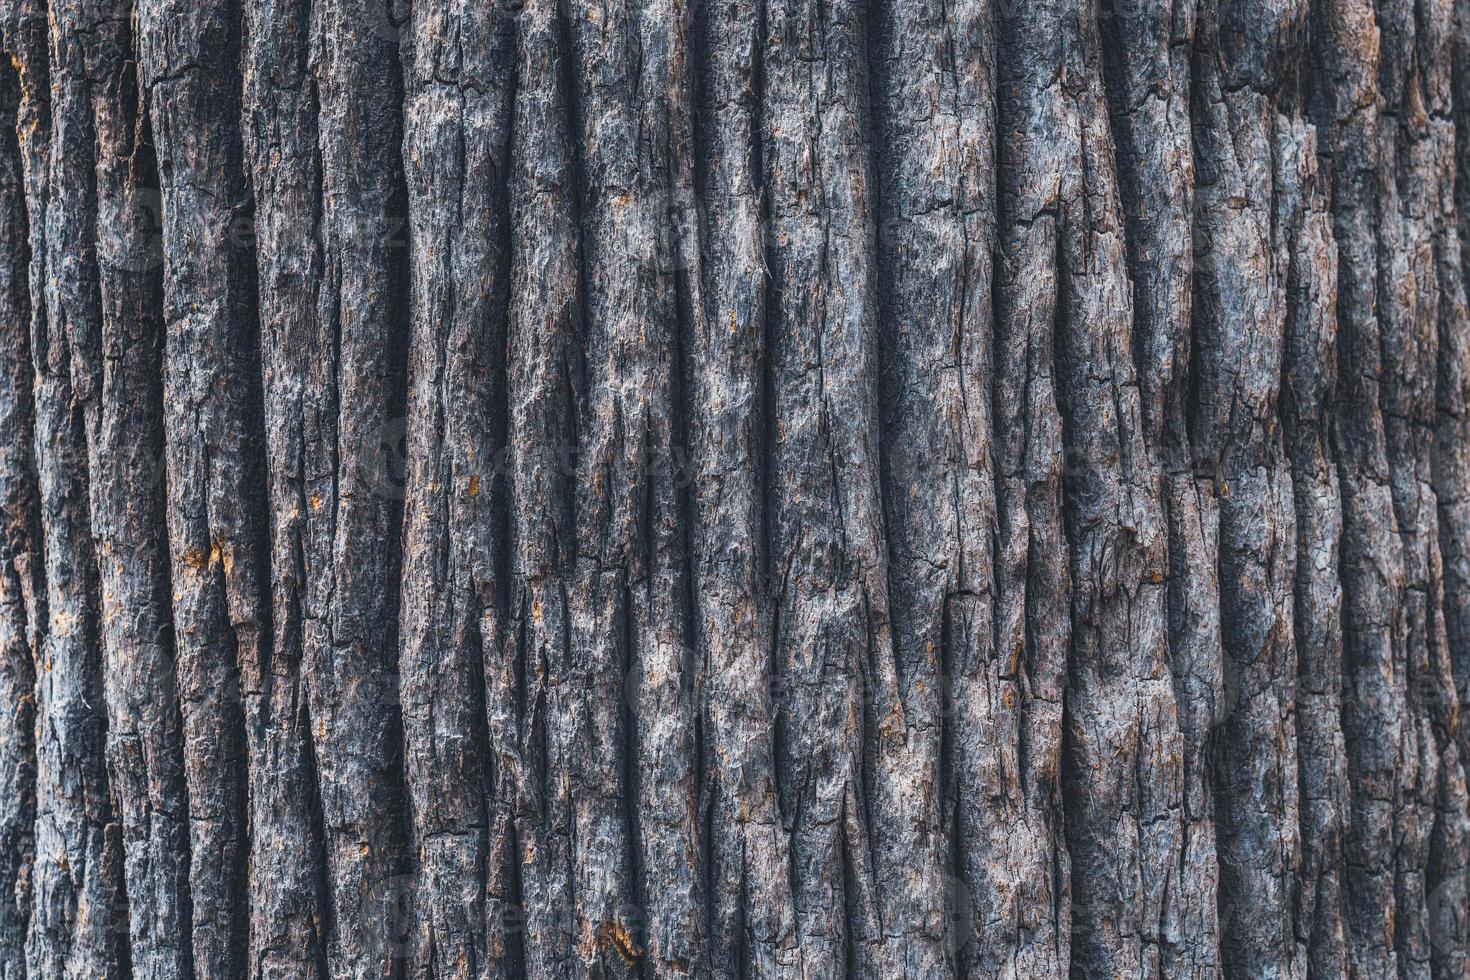 Bark texture of a California fan palm photo